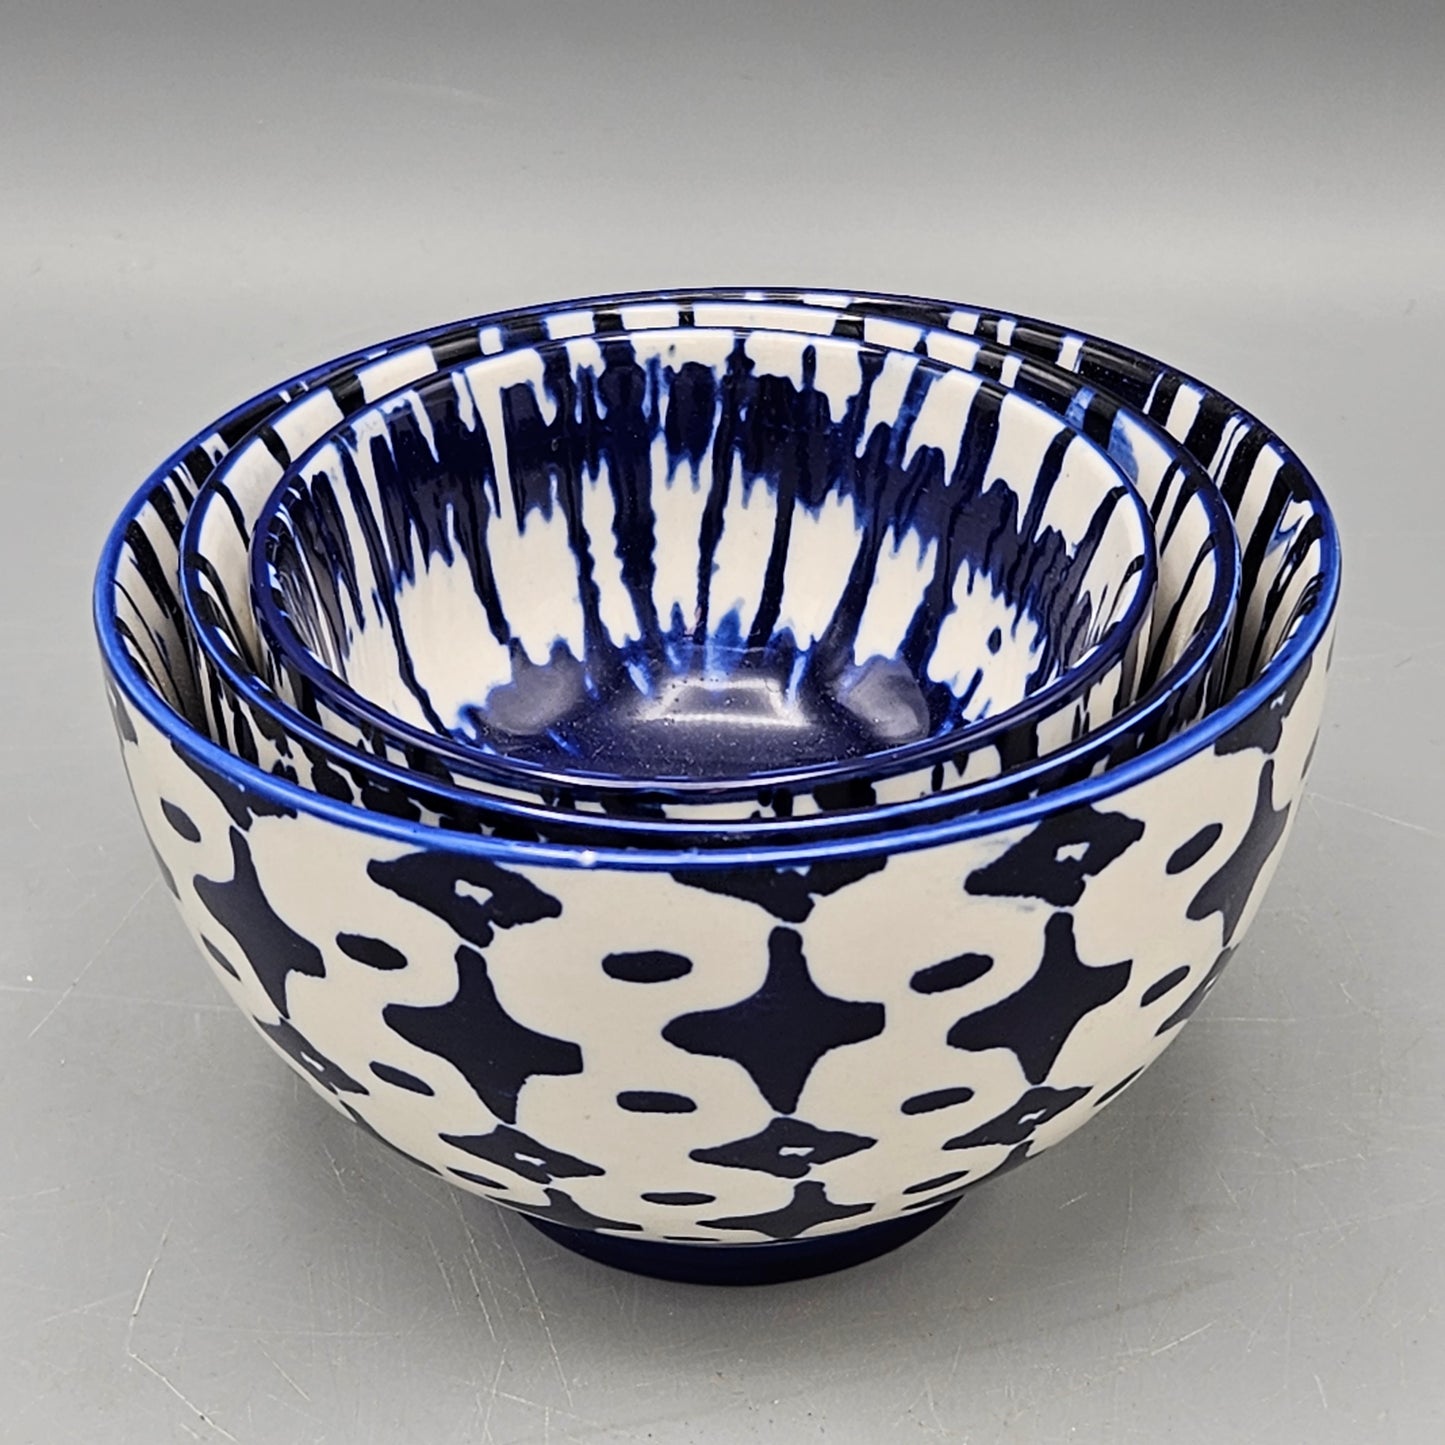 West Elm Blue and White Ceramic Bowls - Set of Three